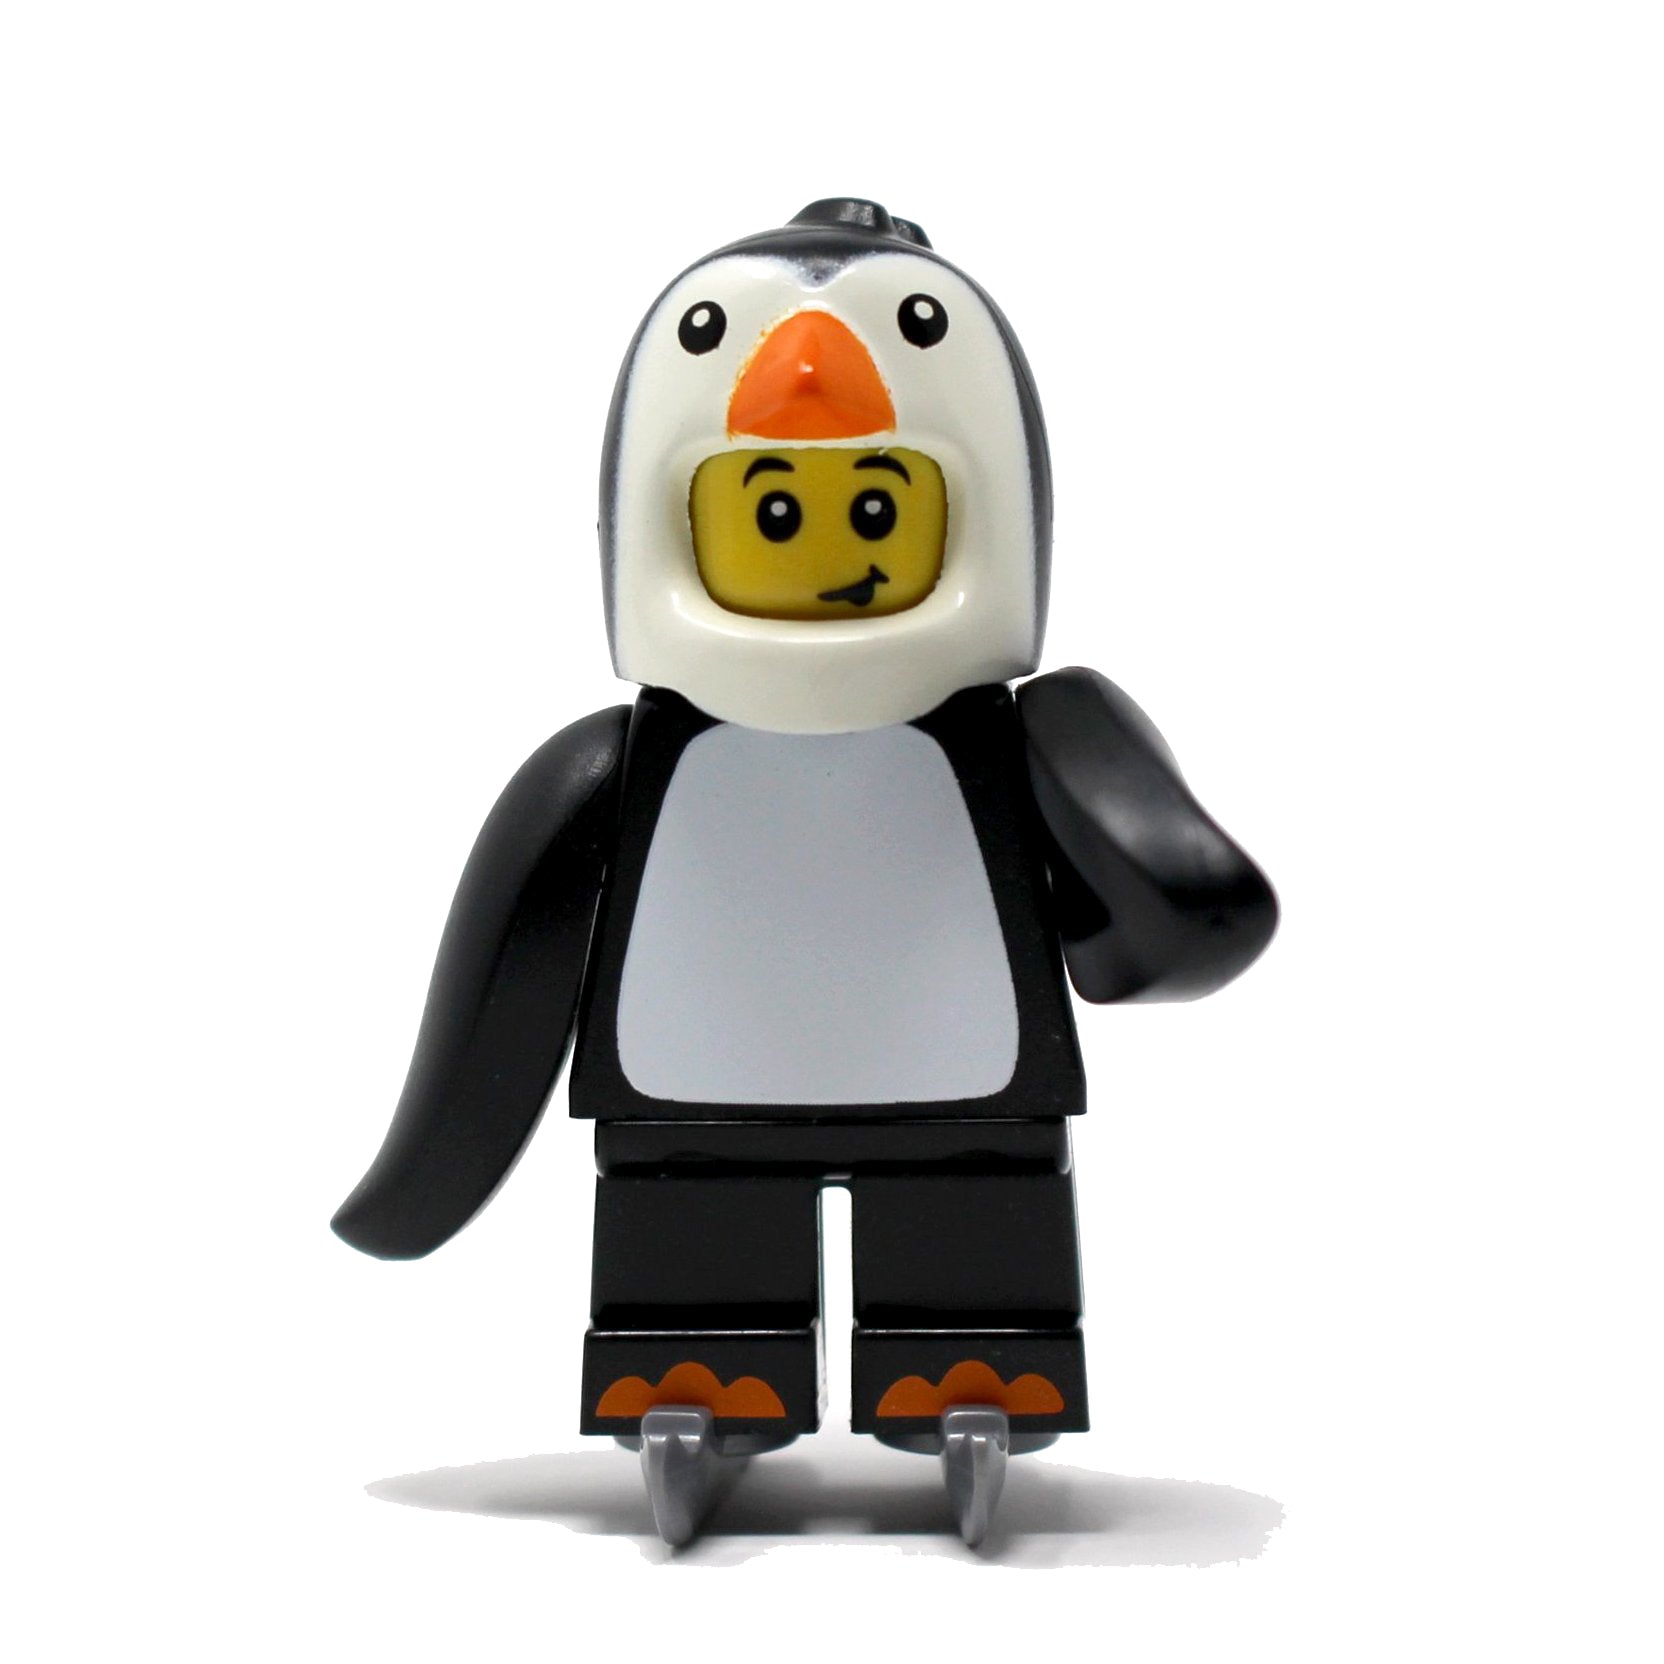 LEGO Series 16: Penguin Boy